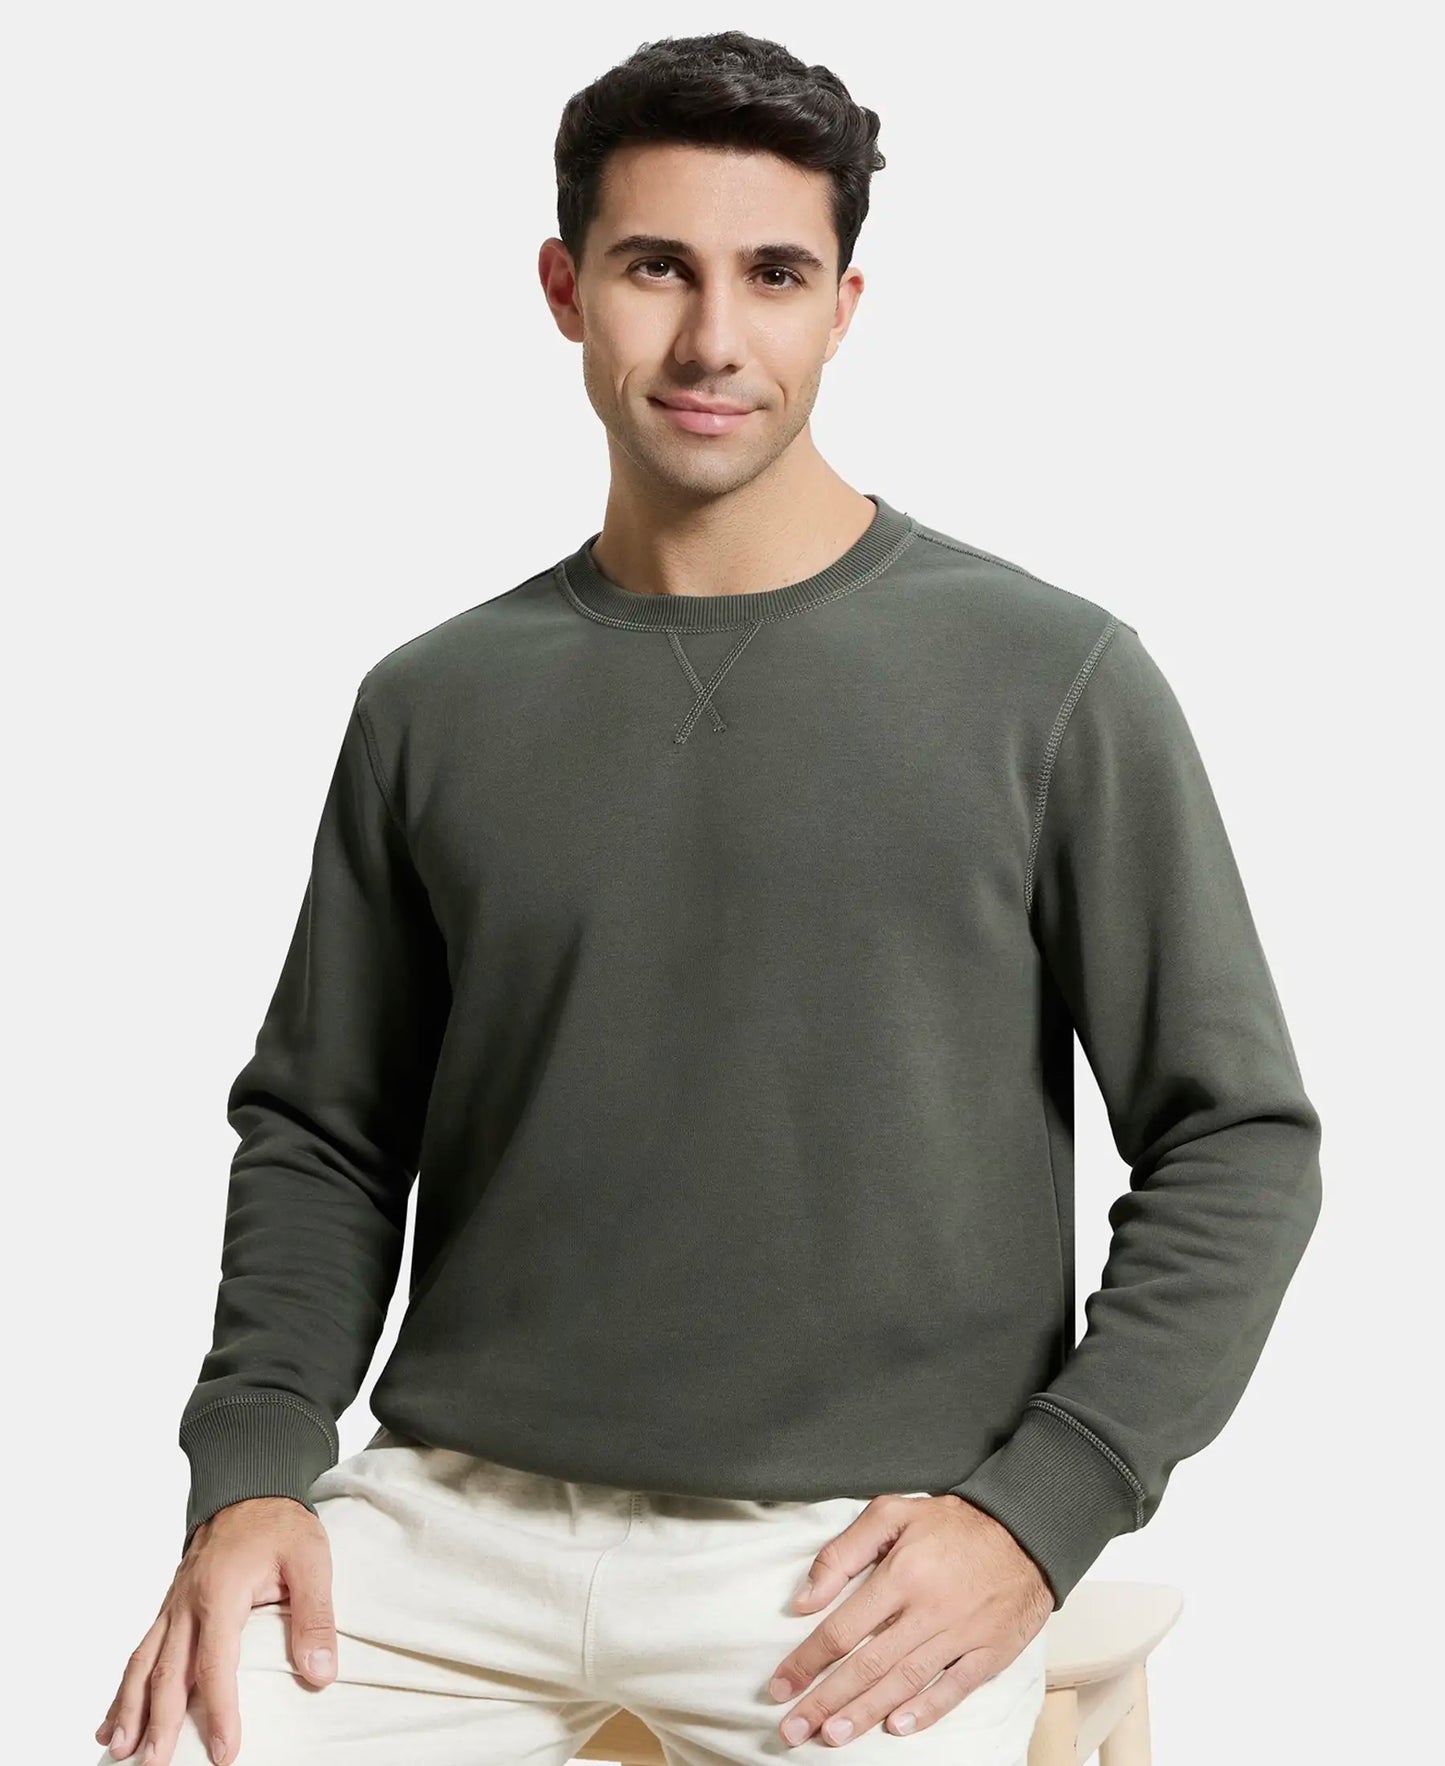 Super Combed Cotton Rich Fleece Sweatshirt with StayWarm Technology - Deep Olive-5